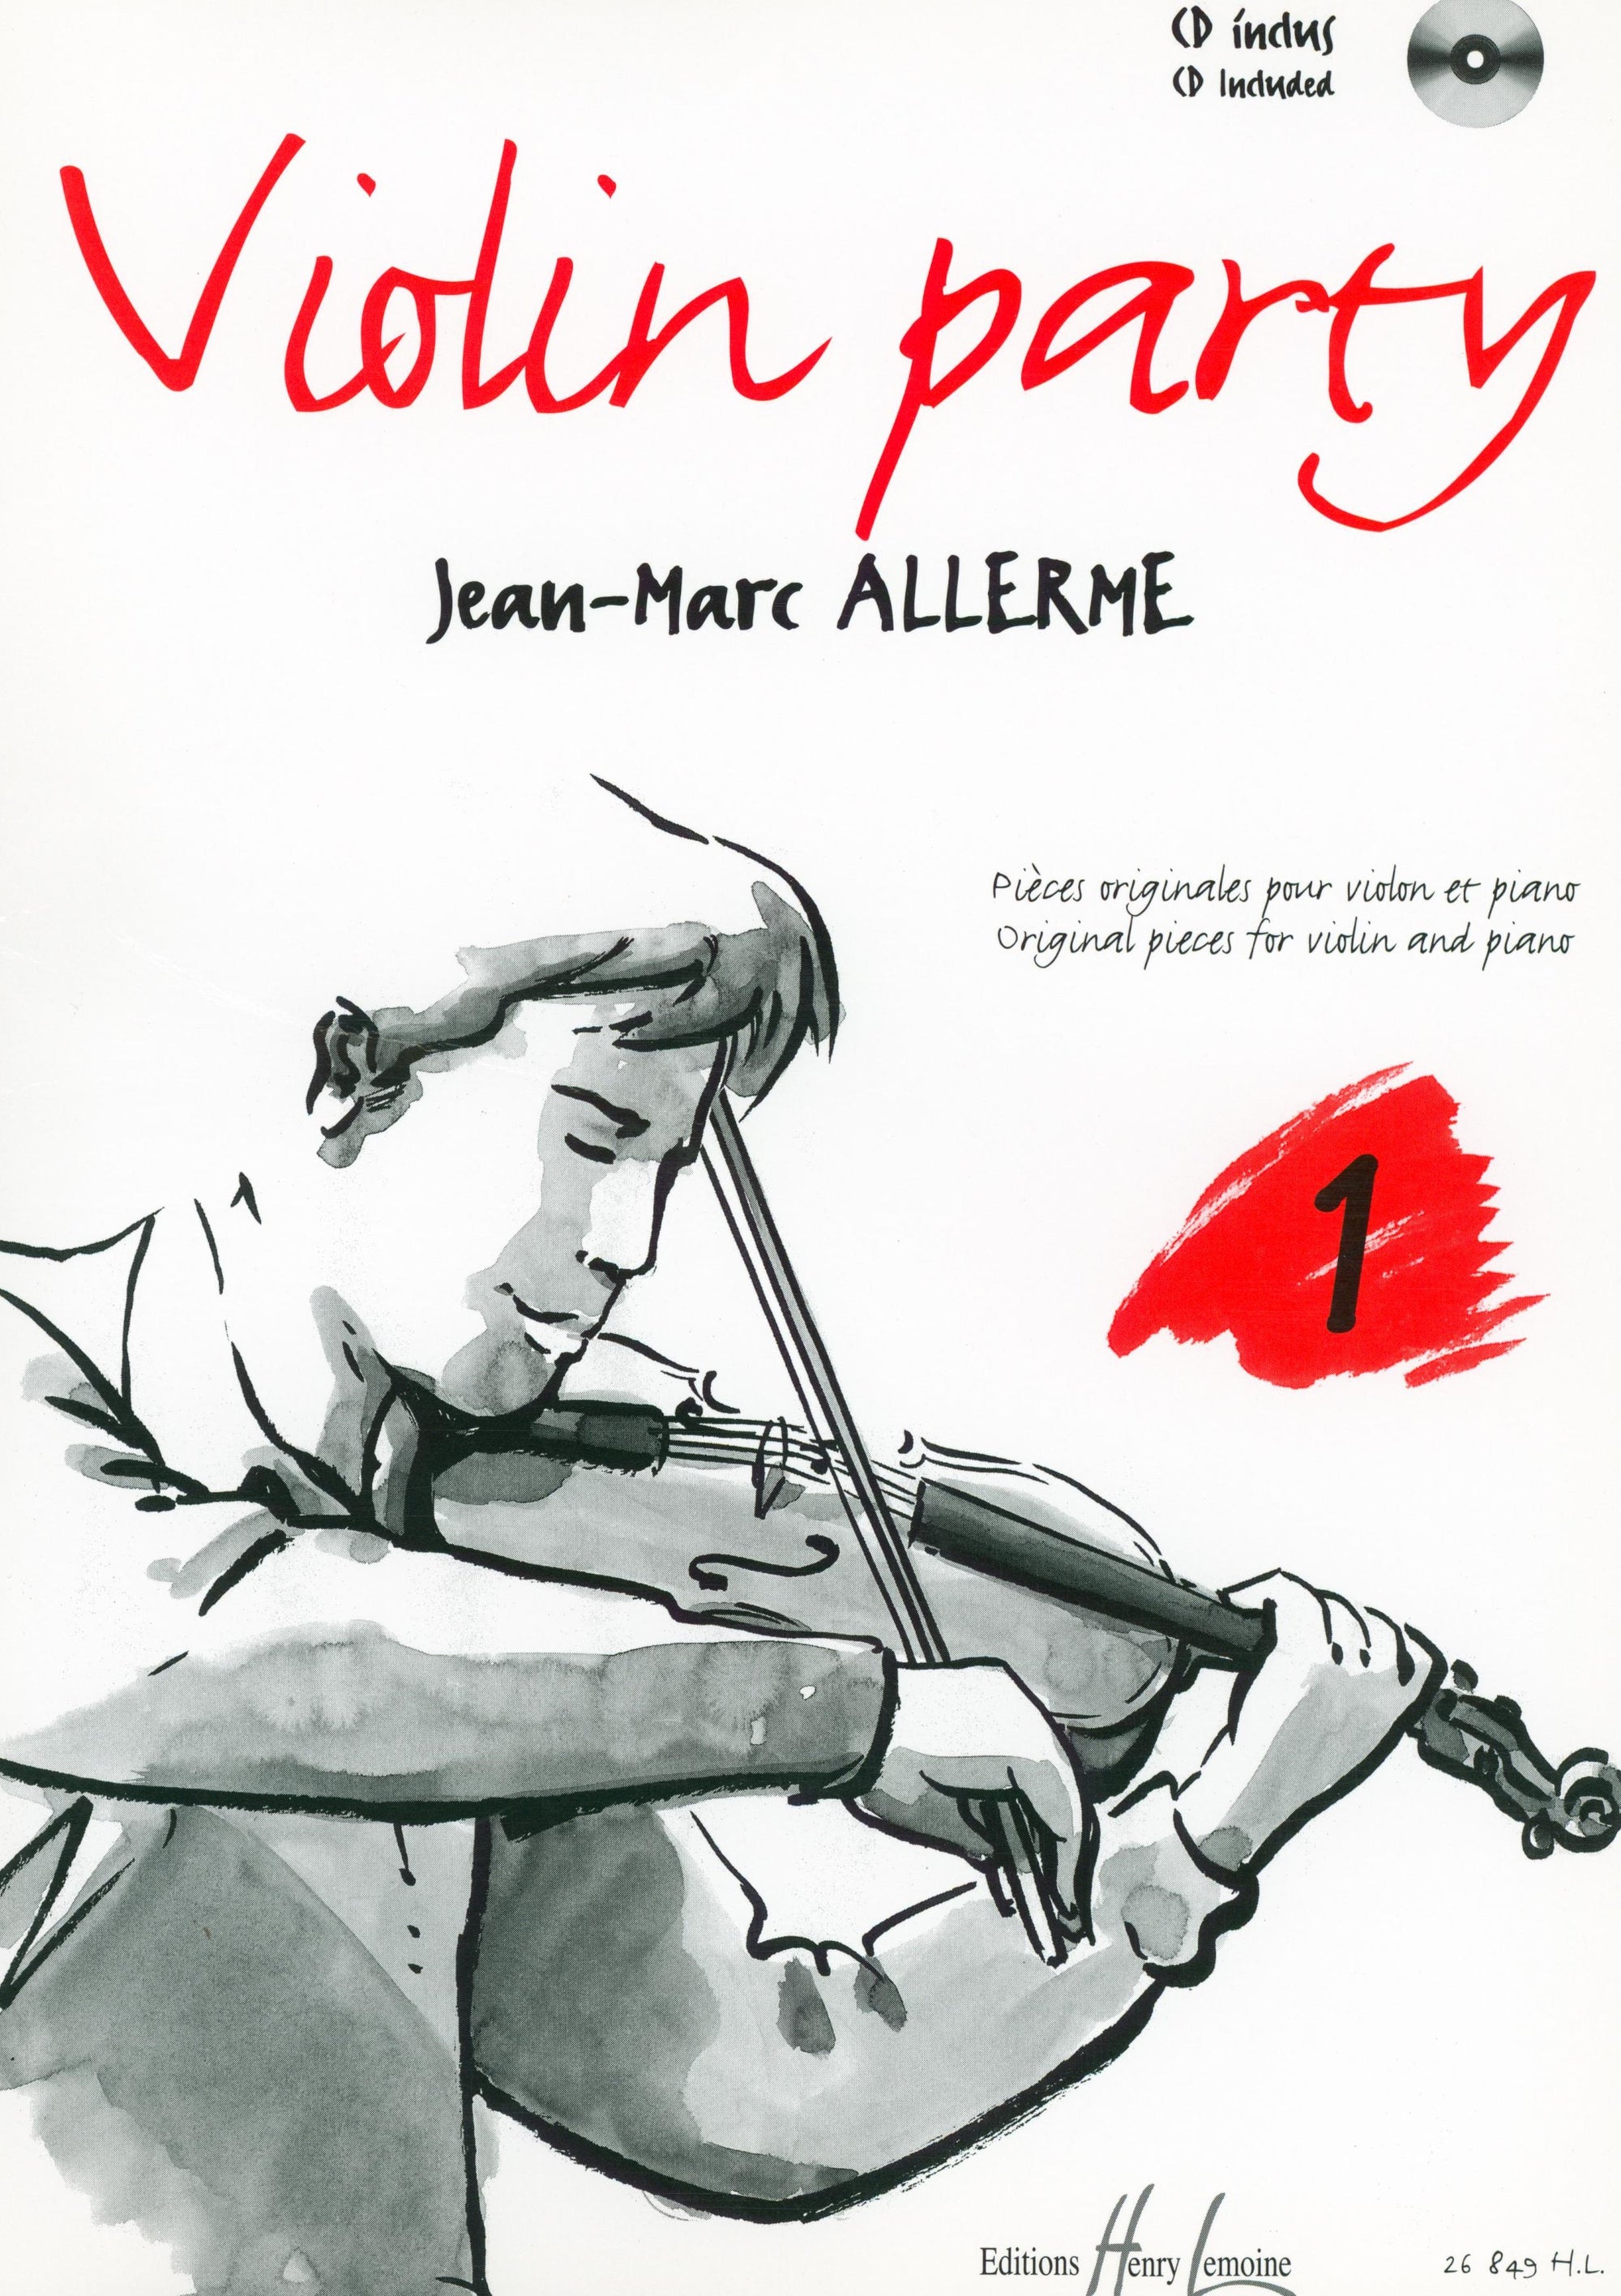 Allerme: Violin Party - Volume 1